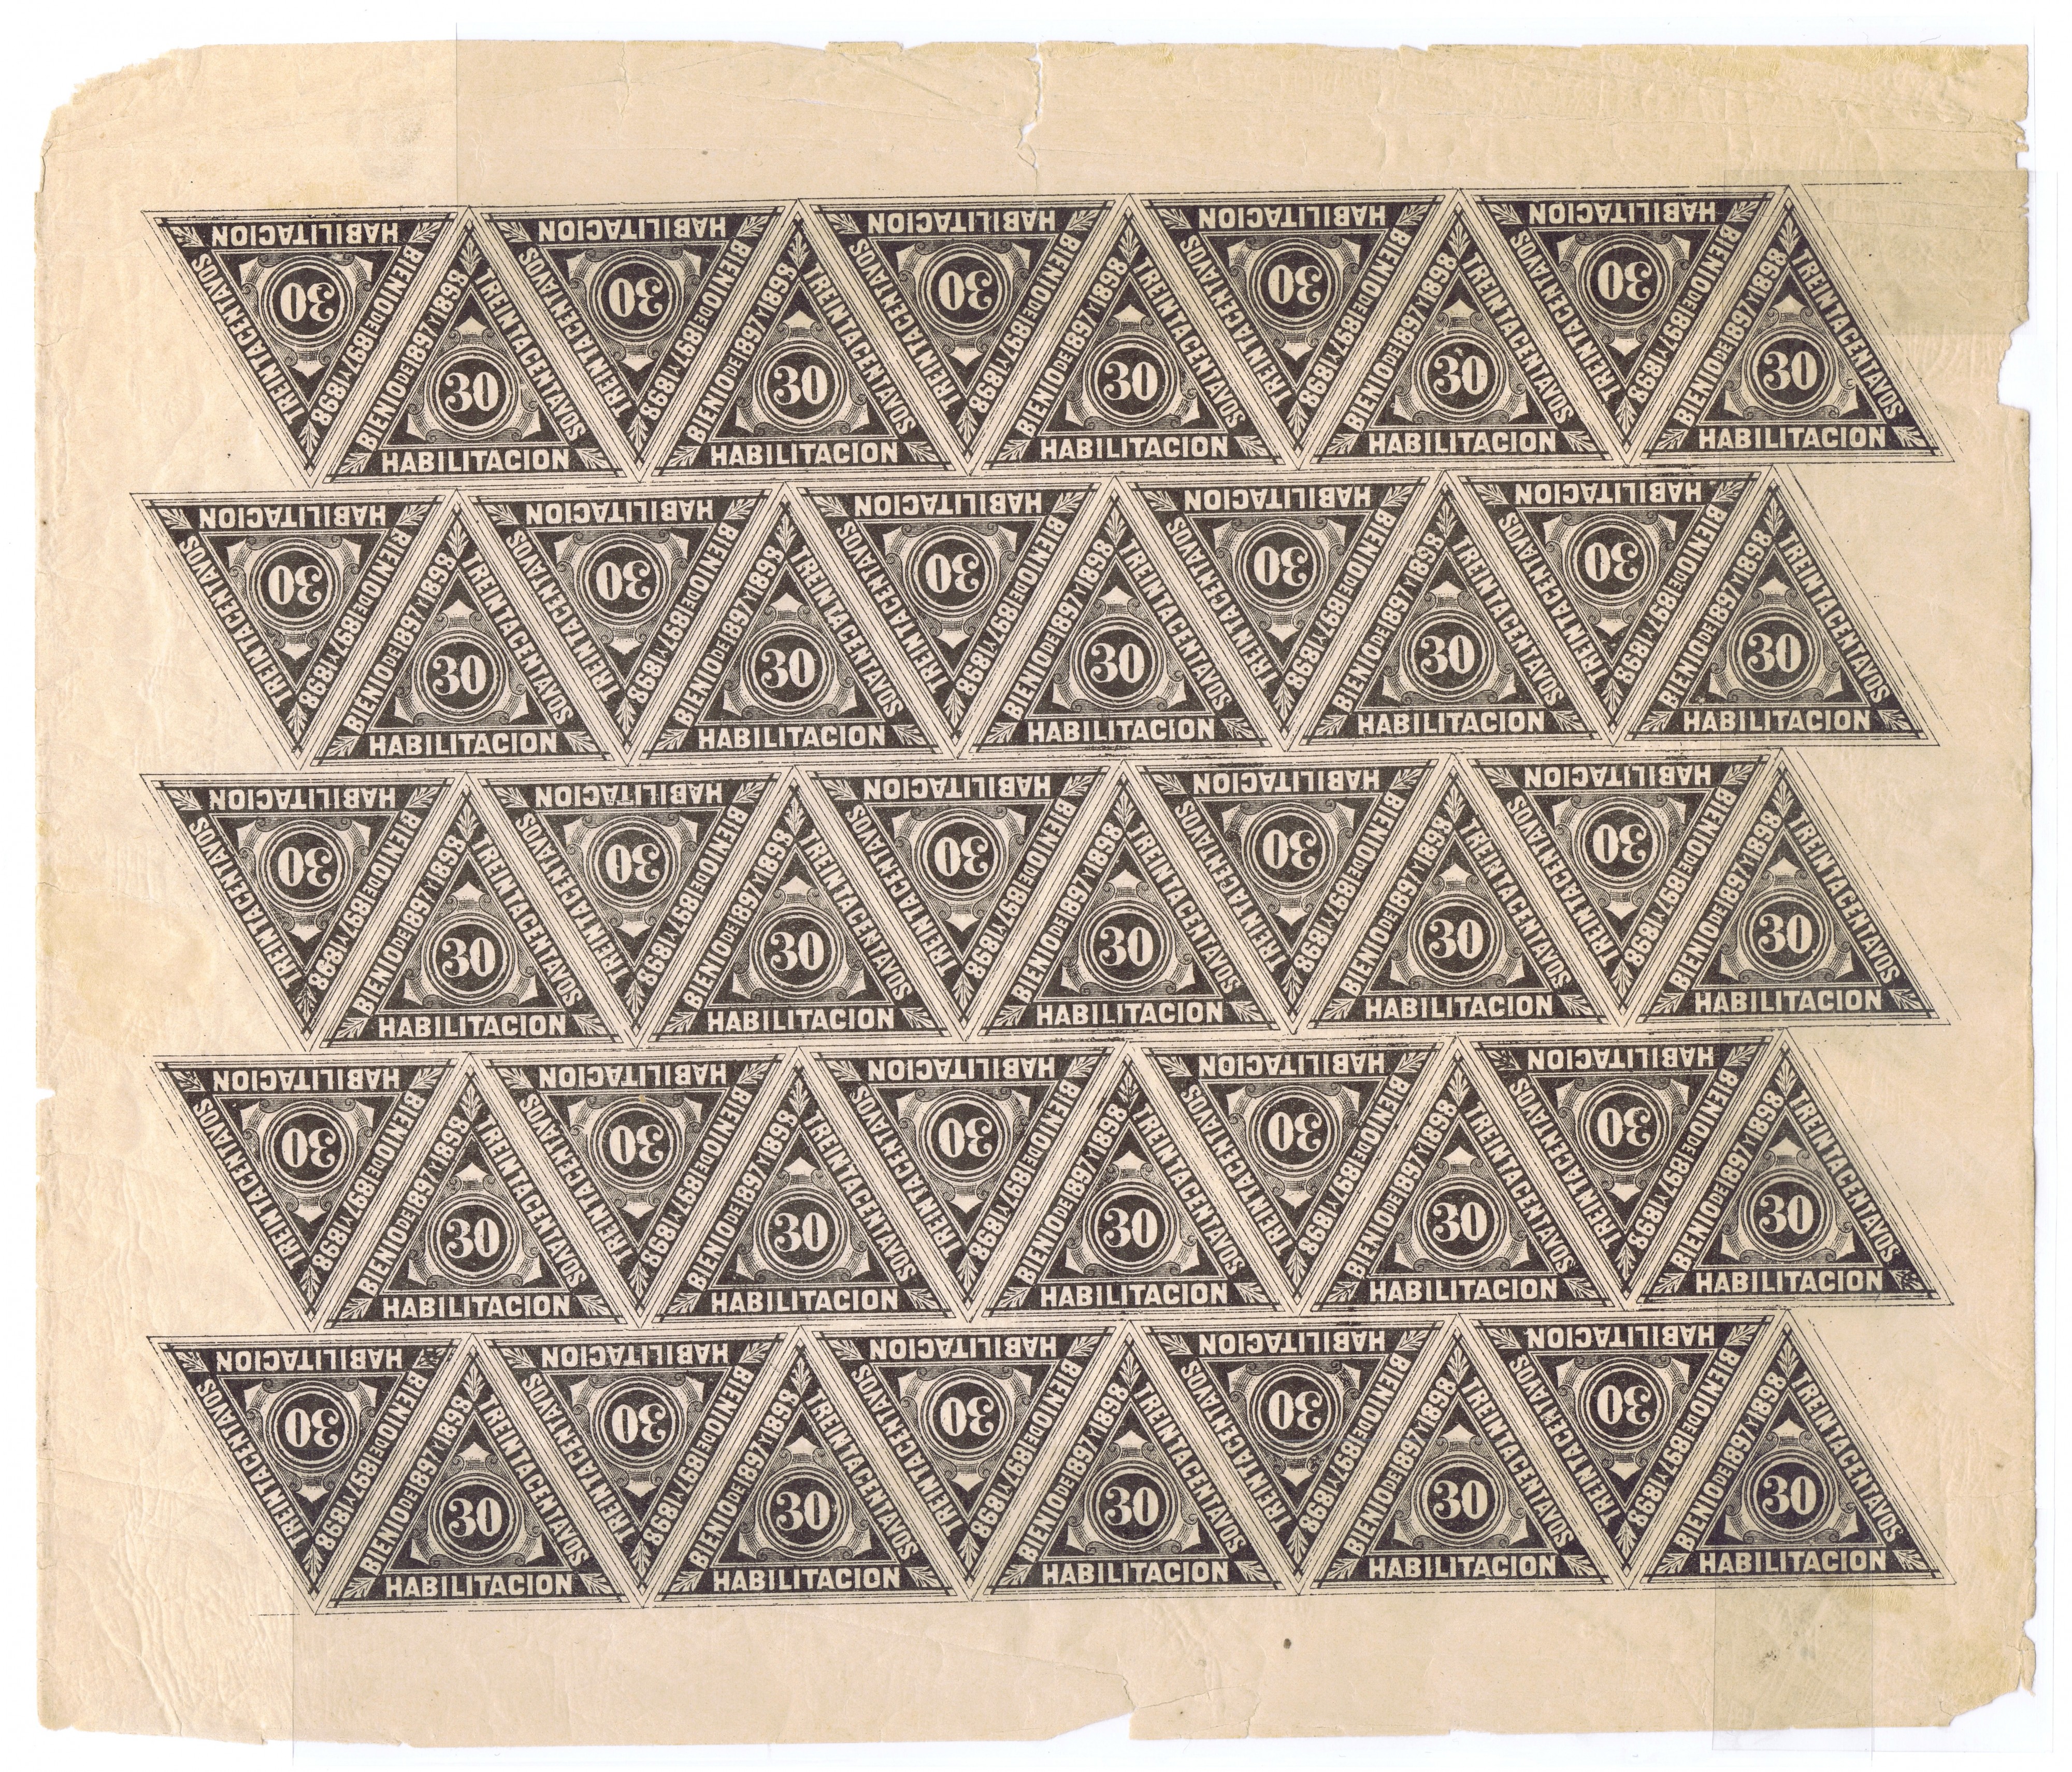 Colombia 1897-98 30c Habilitacion revenue stamp